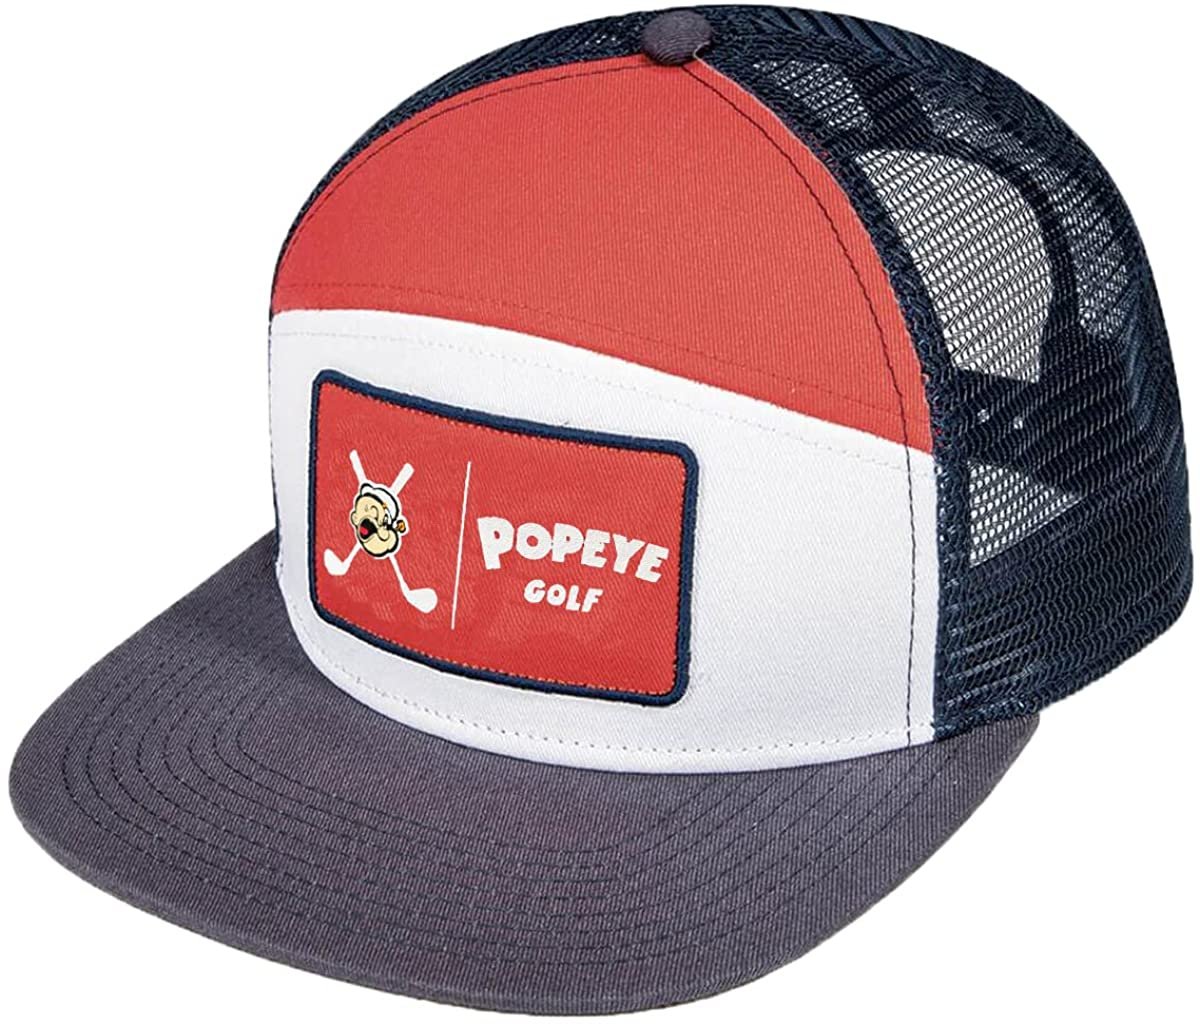 Snapback Golf Adjustable Tradesman Trucker Hat Popeye Mesh